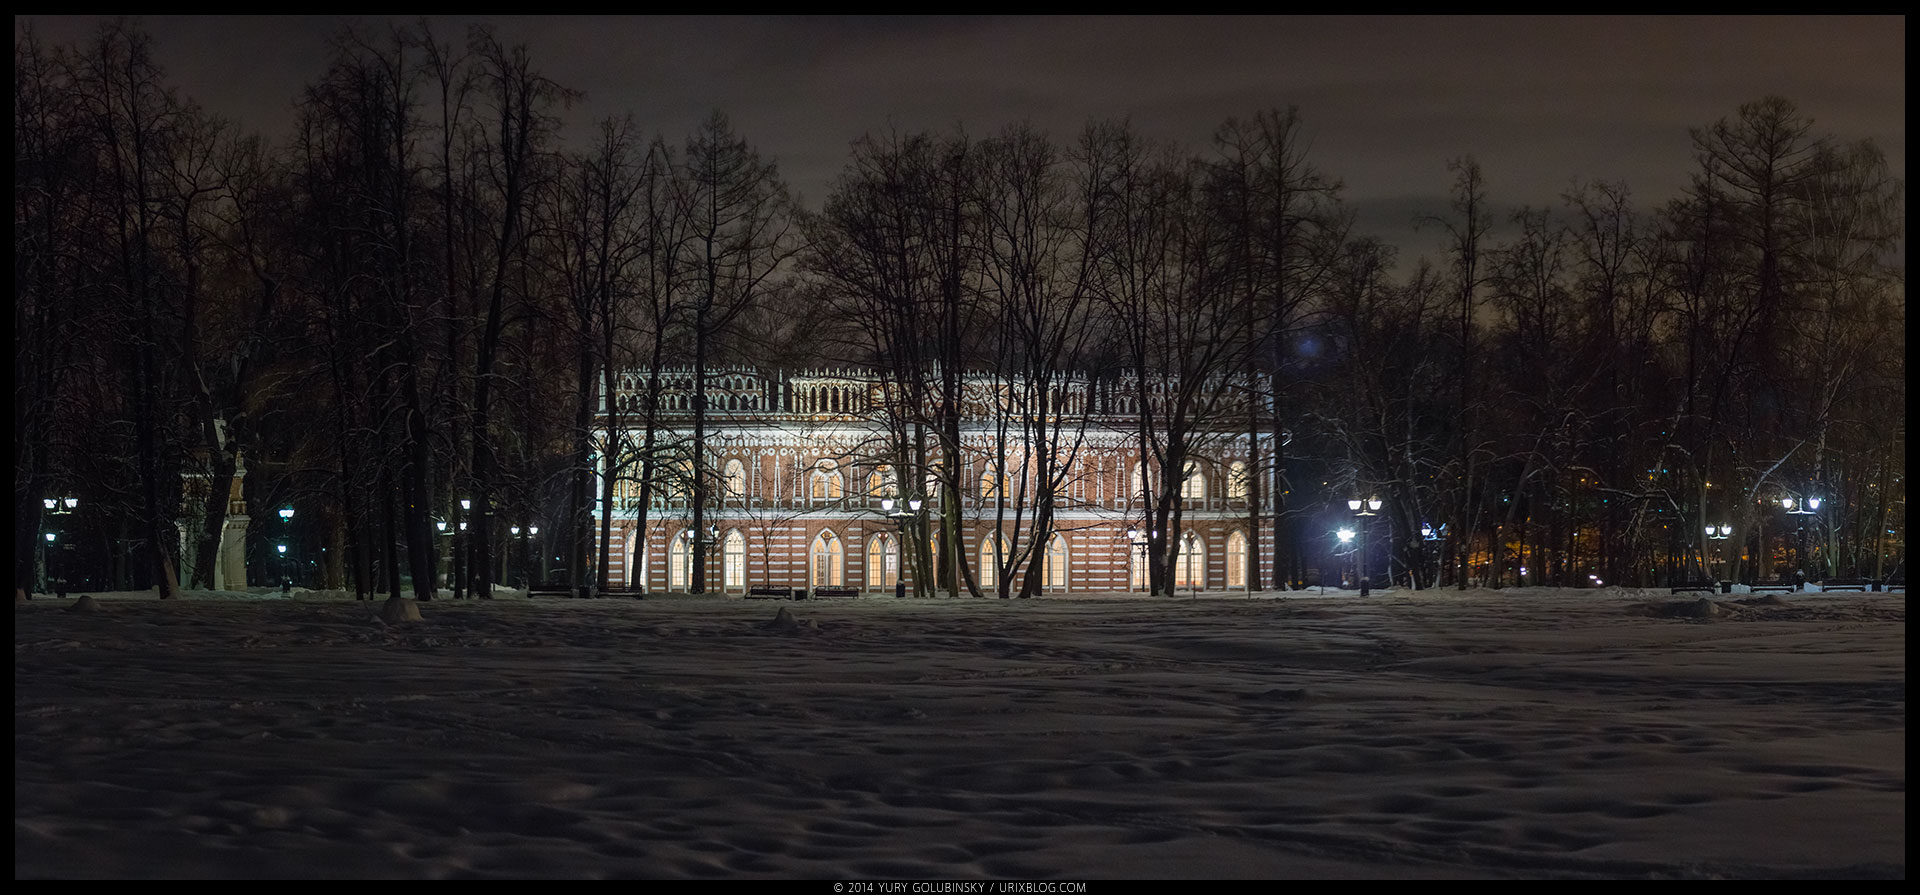 ночь, Царицыно, дворец, архитектура, Москва, Россия, зима, январь, панорама, 2015